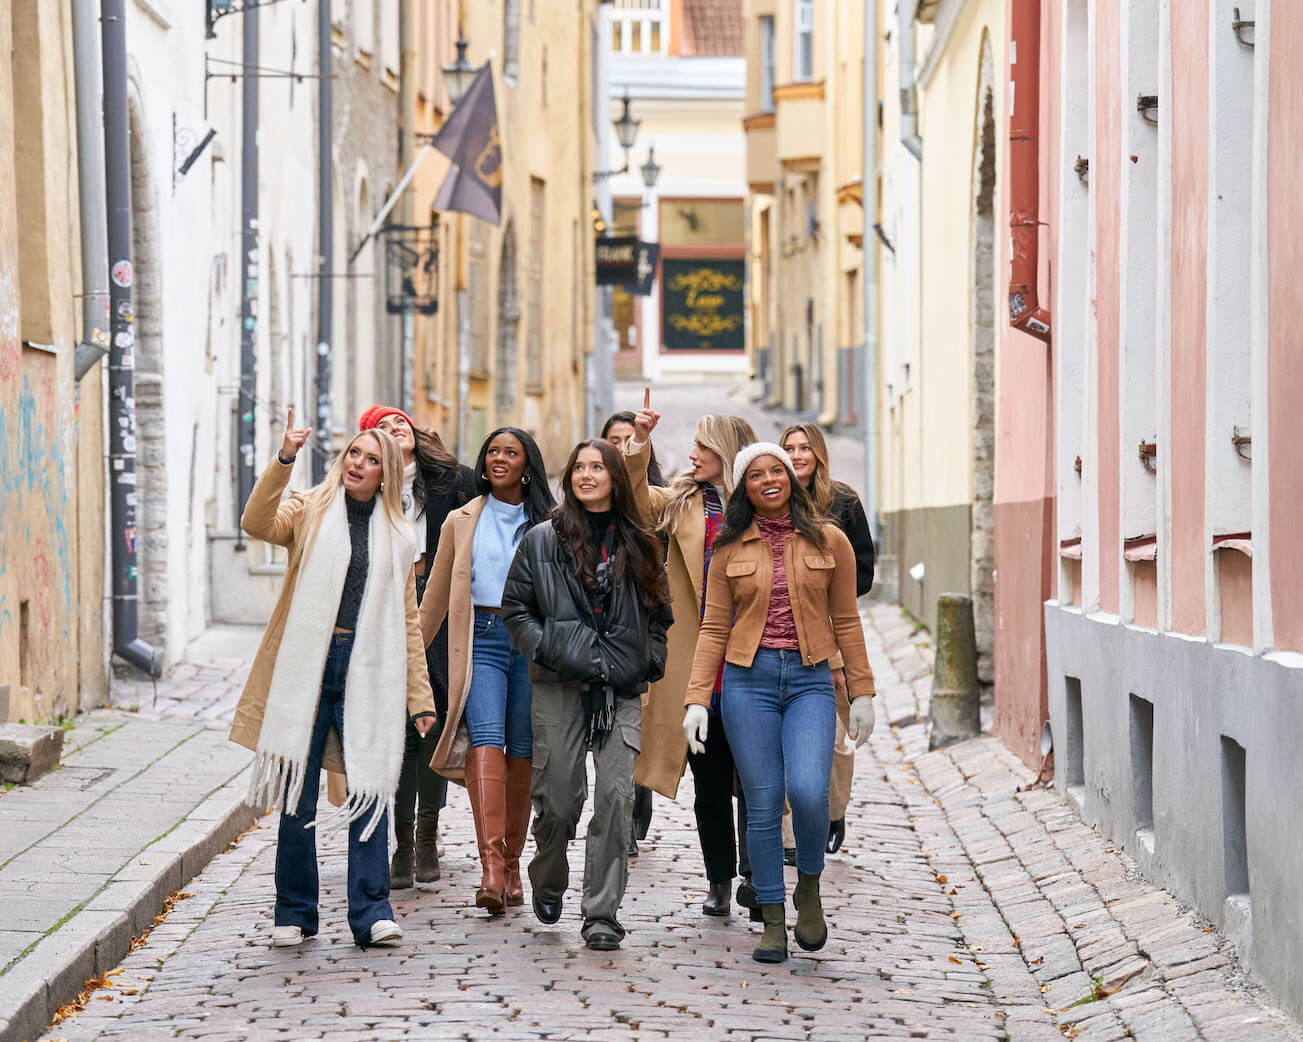 Zach Shallcross's women walking around Estonia in 'The Bachelor' Season 27 Episode 6